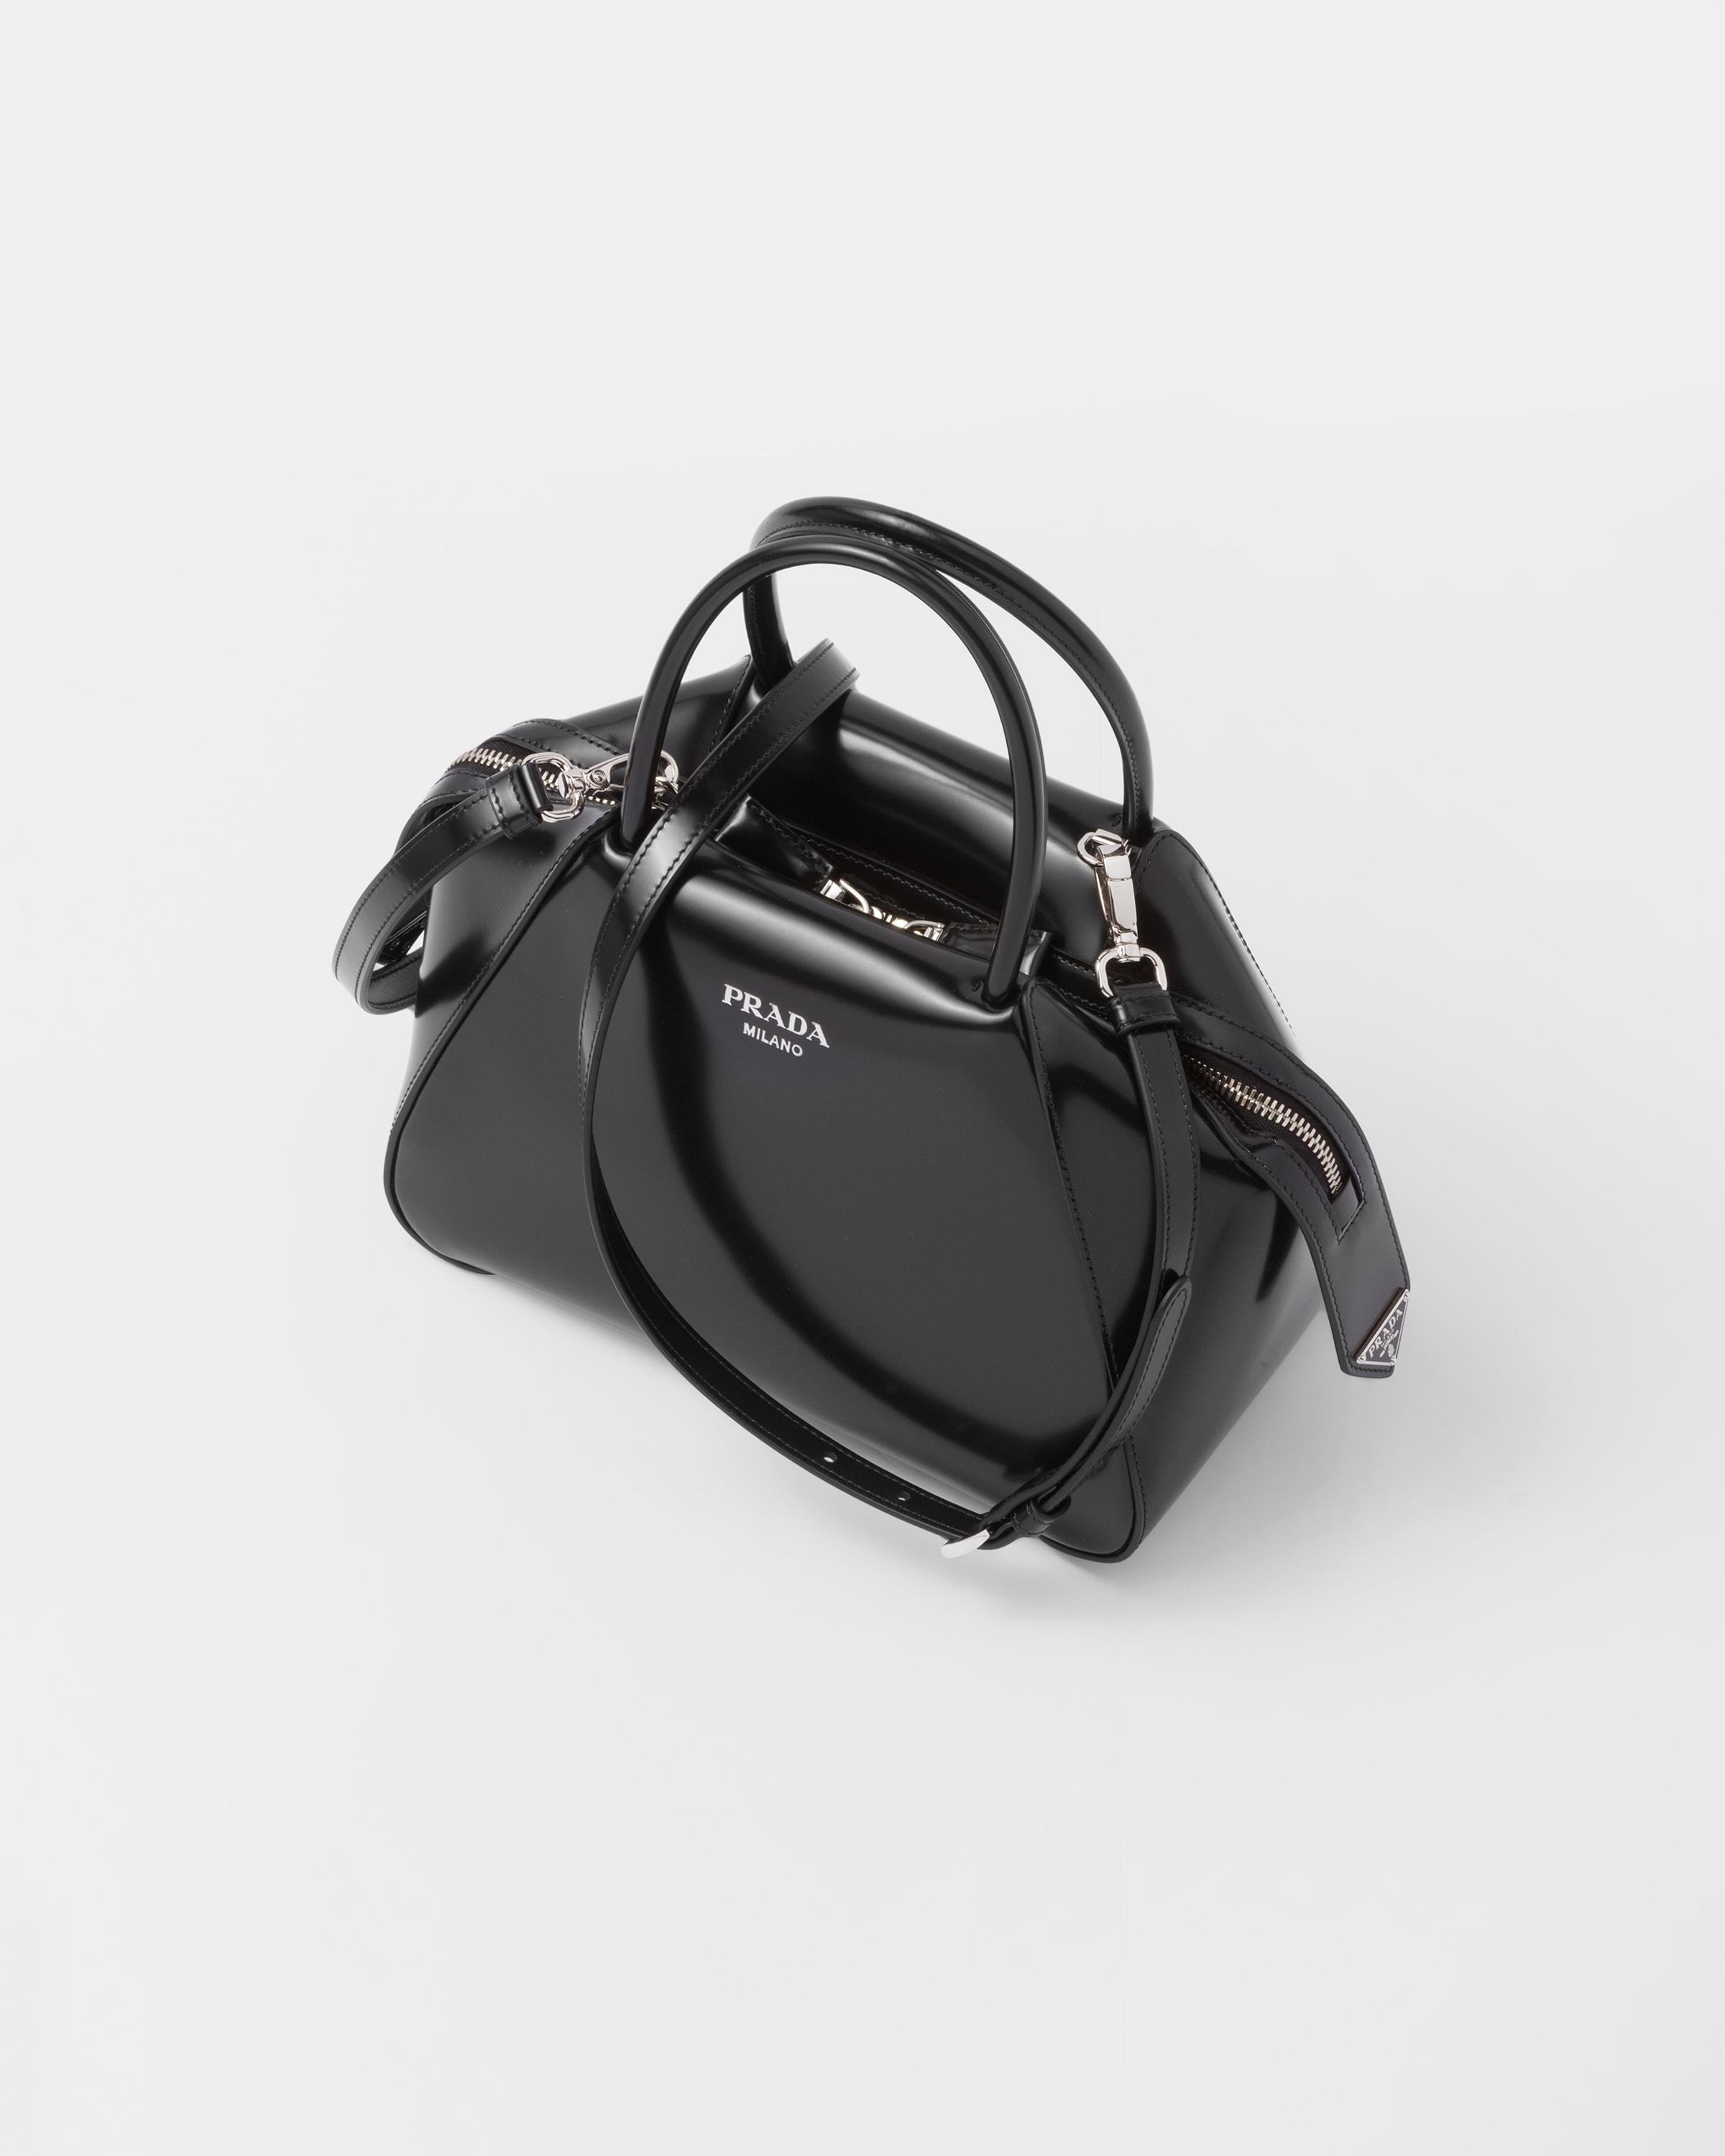 Prada Small Brushed Leather Supernova Handbag in Black | Lyst